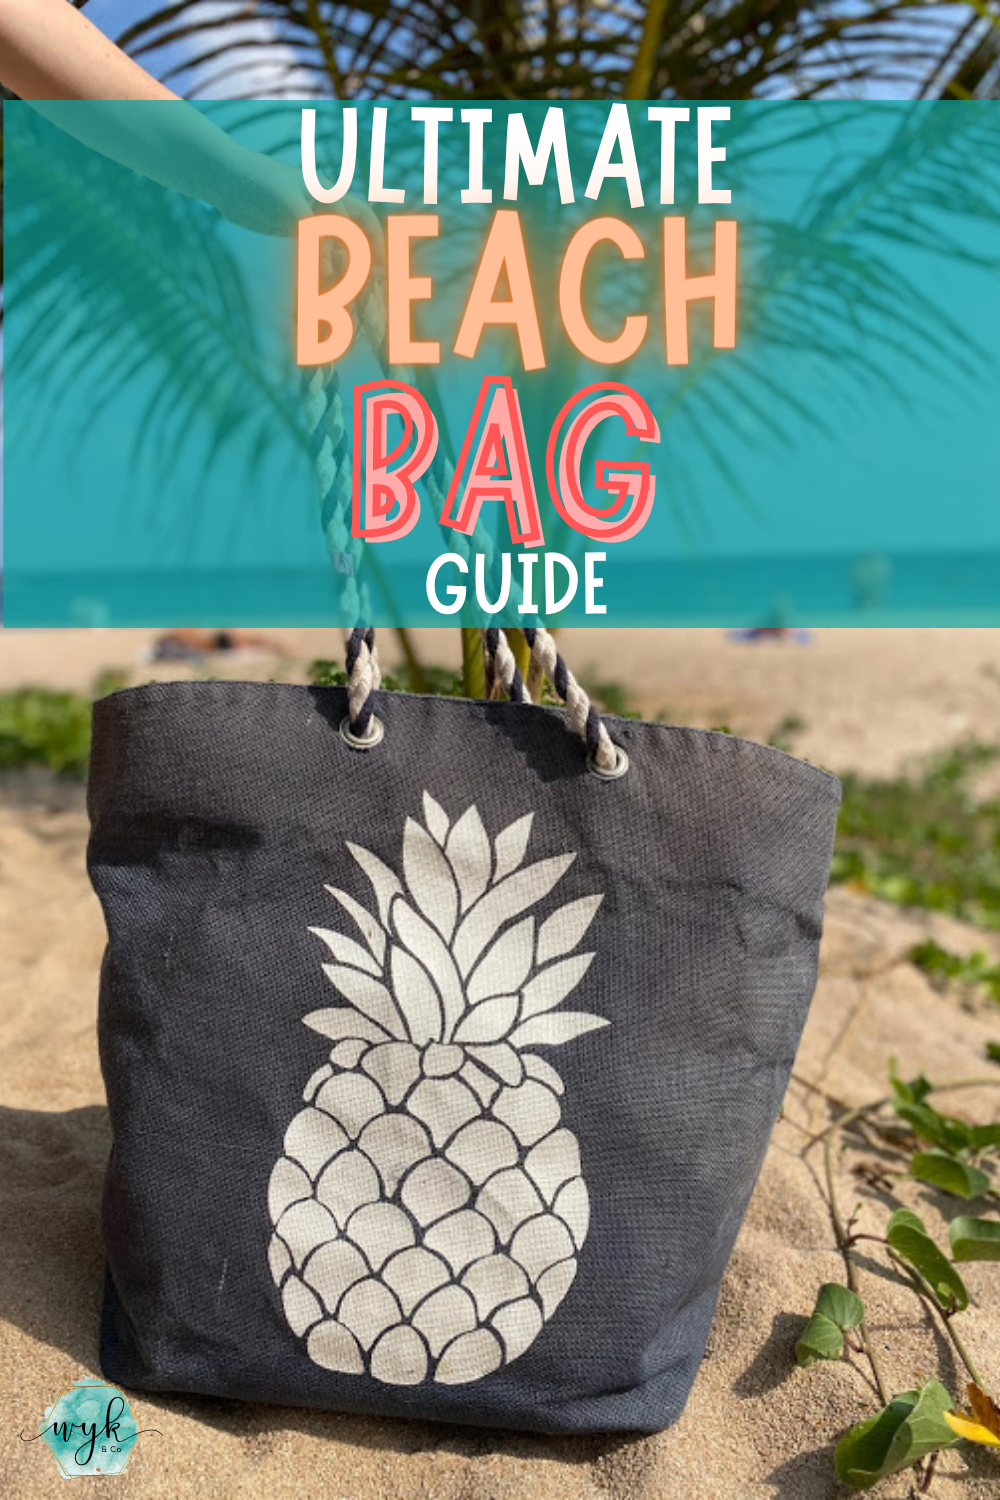 Beach Bag (aka Survival Kit) for a Beach Day with the Kiddos – WYK & Co